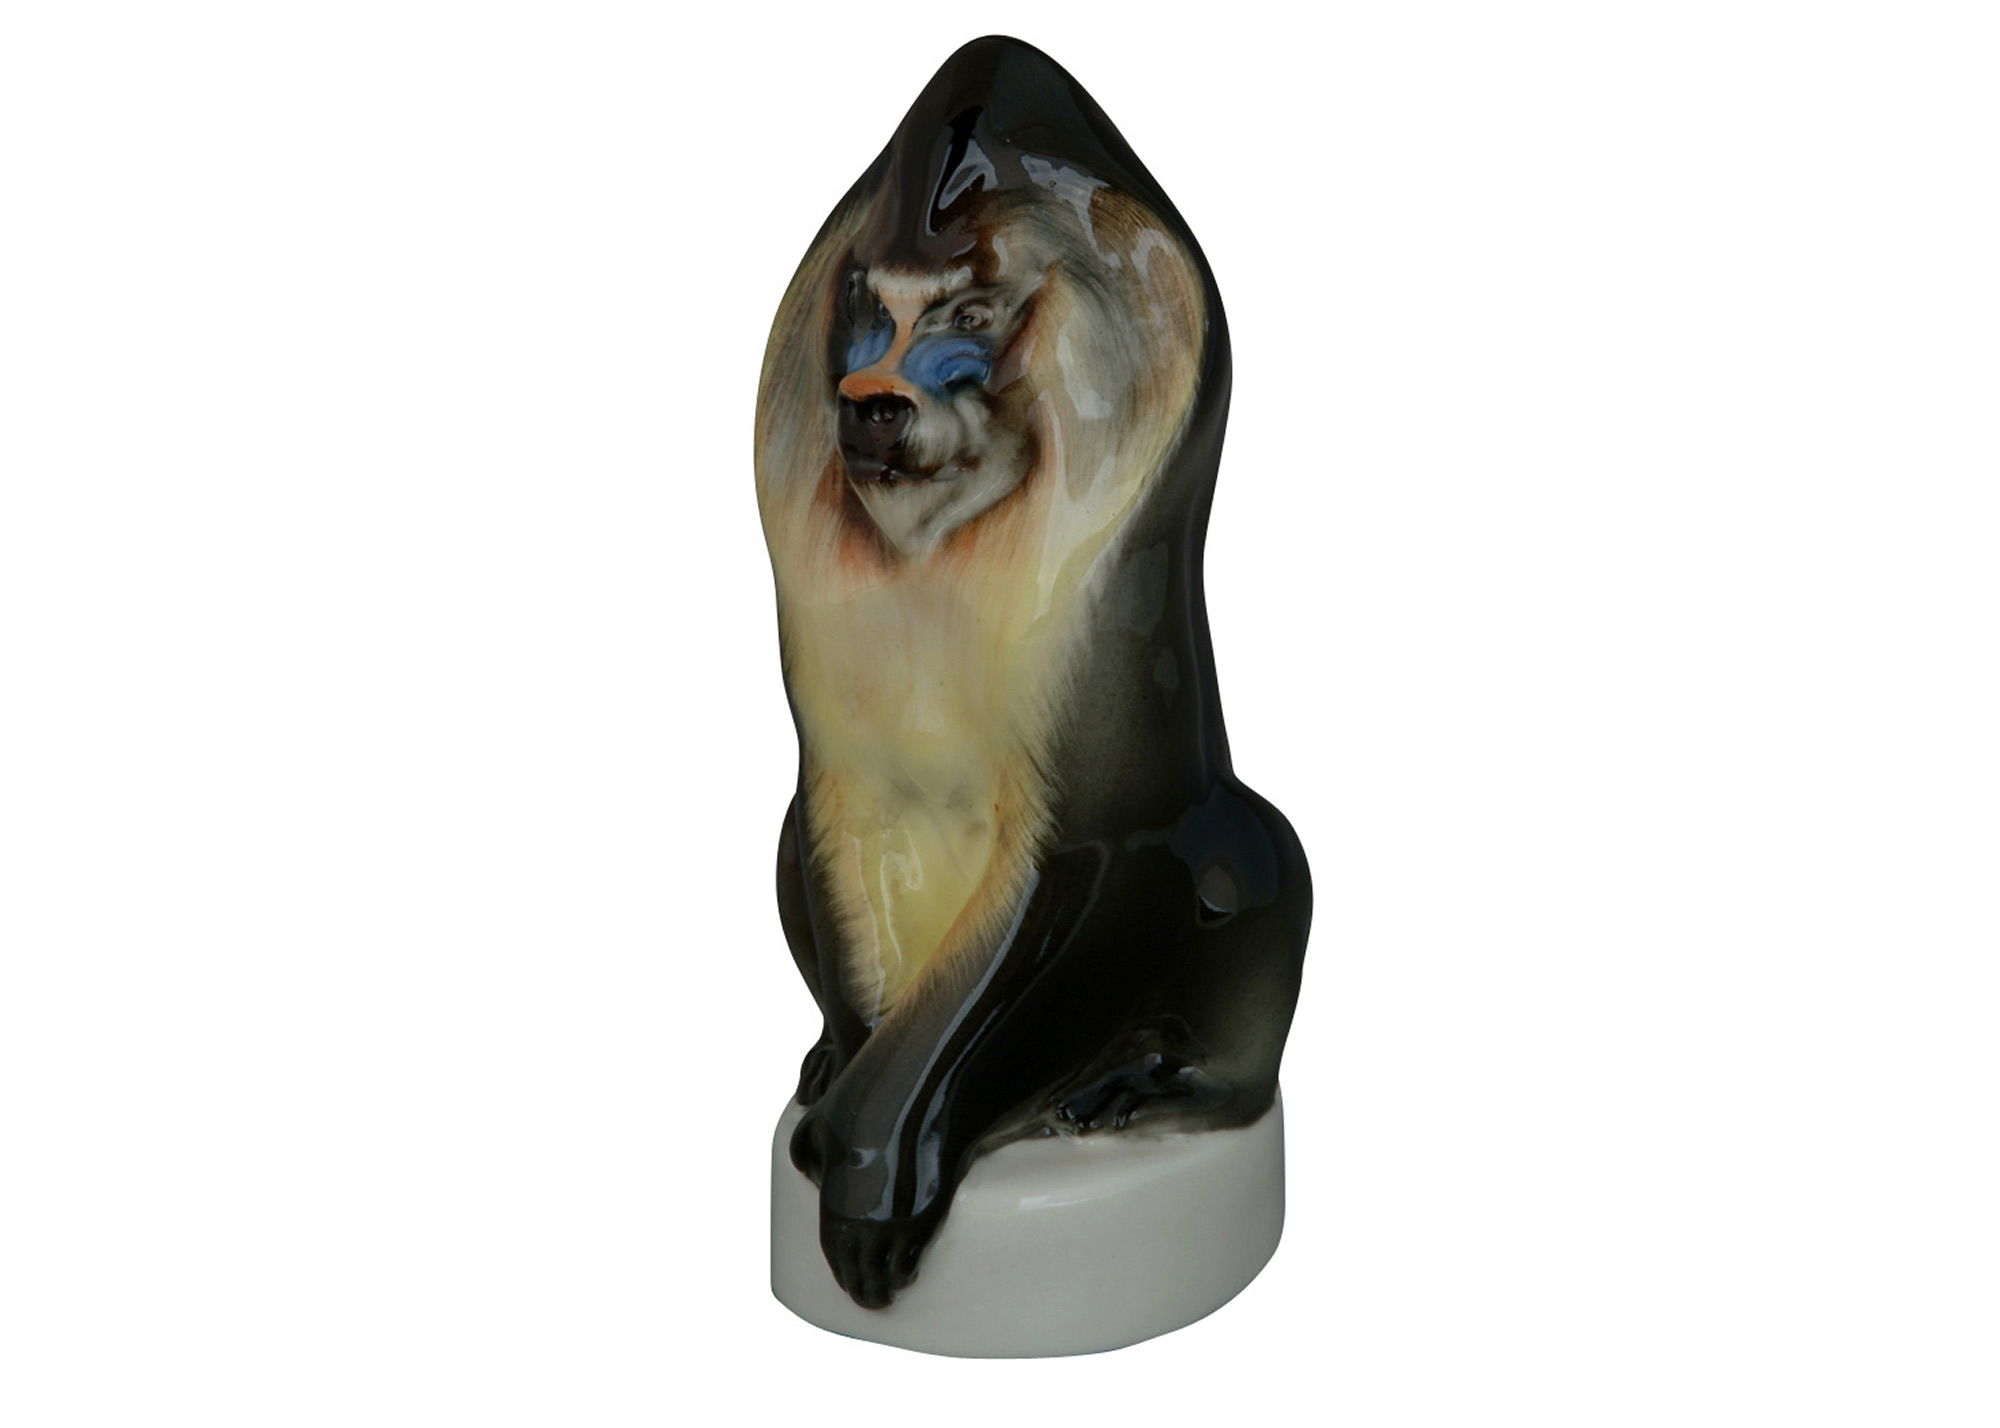 Buy Baboon Figurine at GoldenCockerel.com